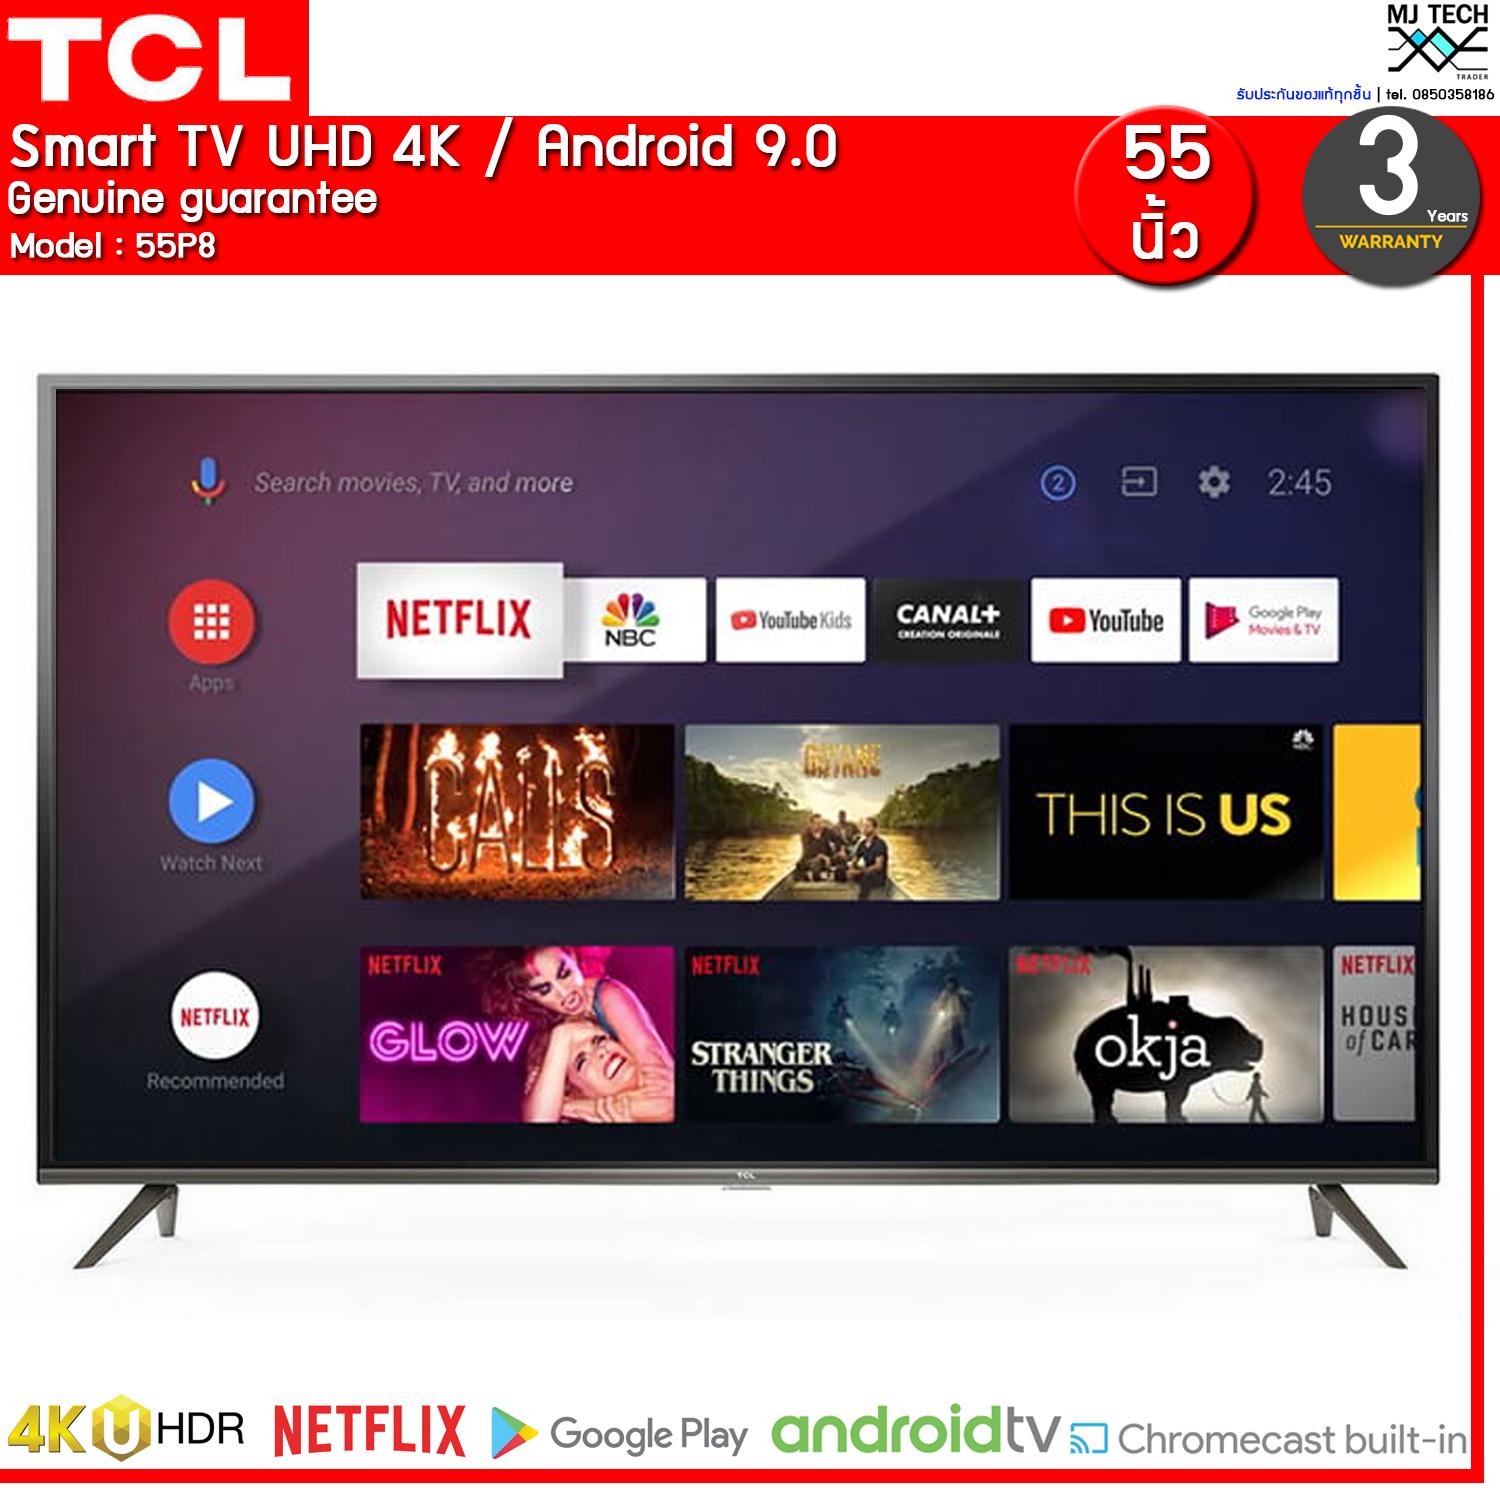 TCL Smart TV UHD 4K Android Version 9.0 ขนาด 55 นิ้ว รุ่น 55P8 (ส่งฟรีทั่วไทย)